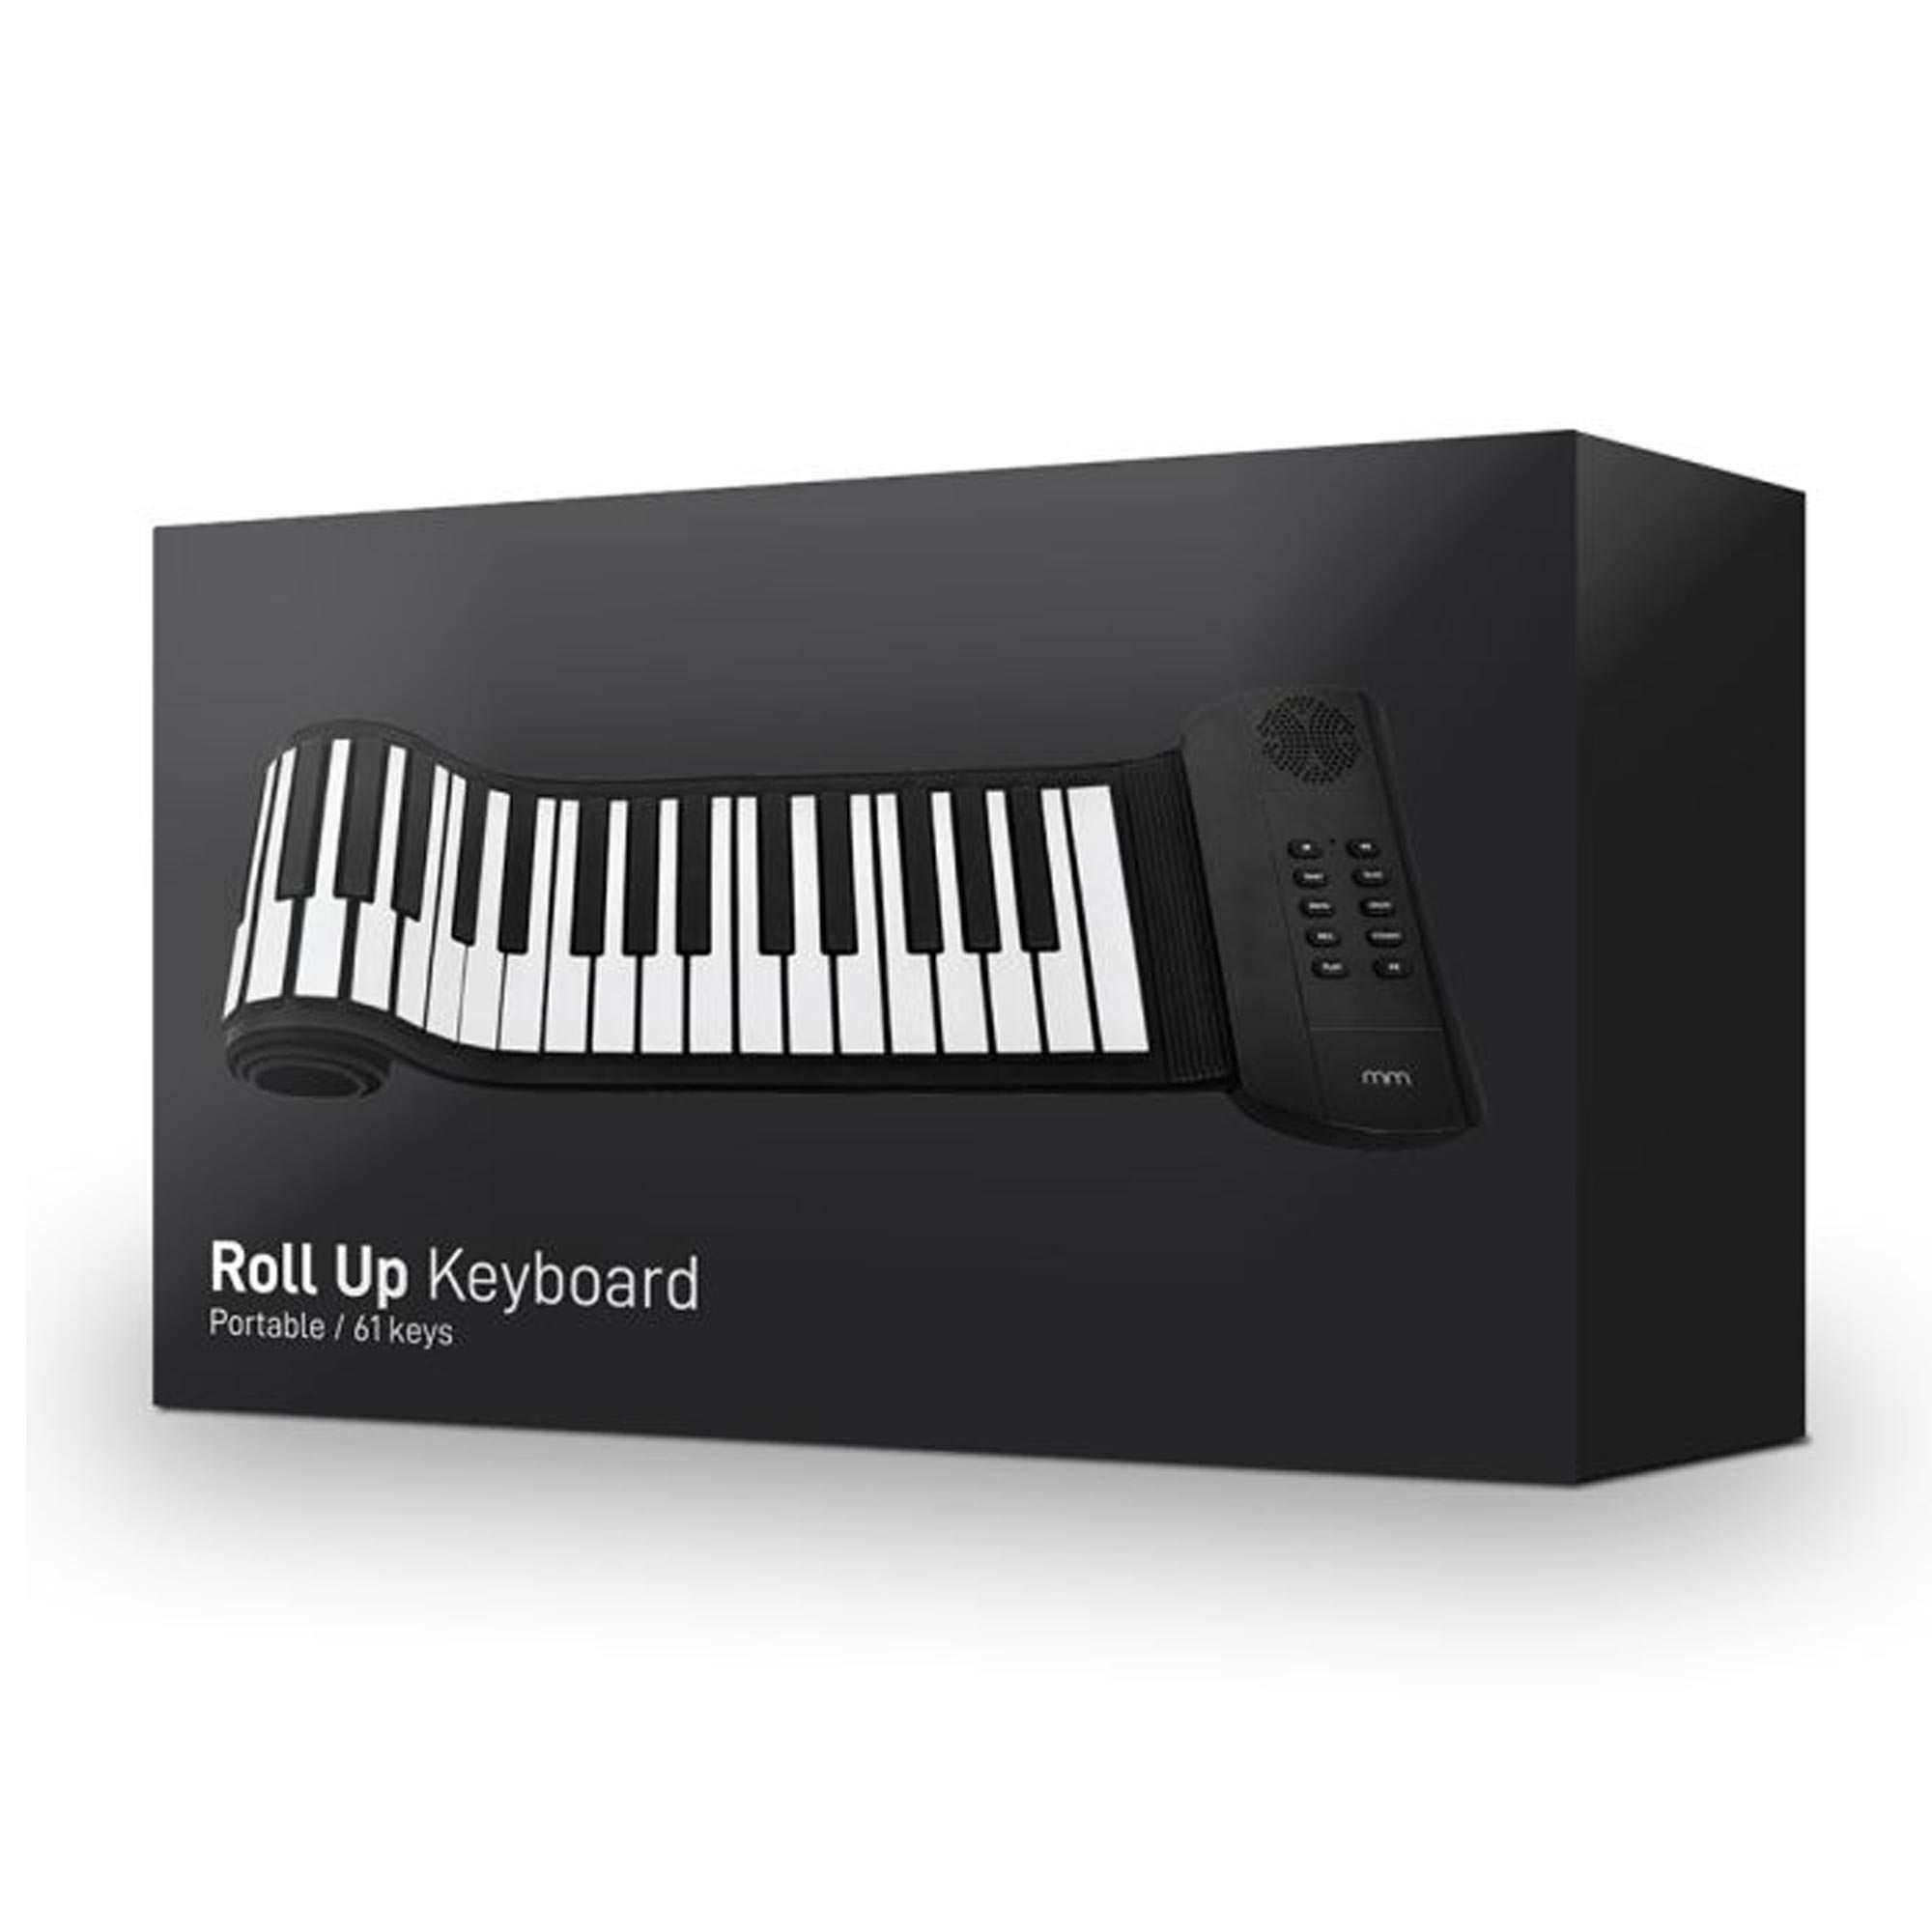 Roll Up Keyboard